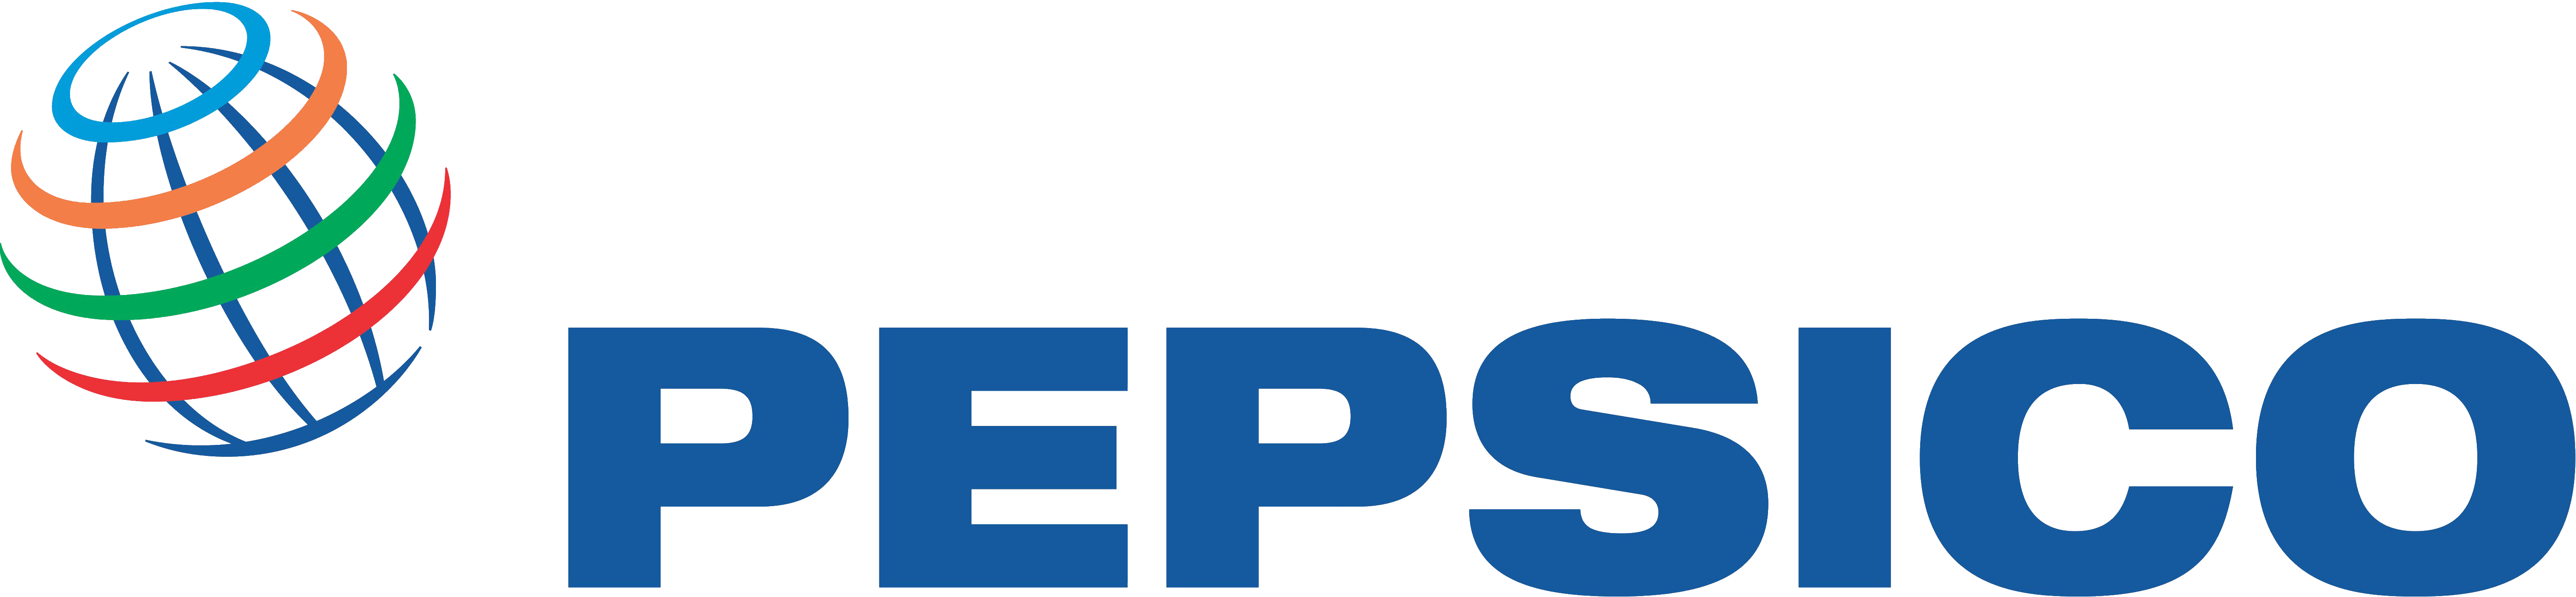 PepsiCo Logo - pepsico logo globe - American International School of Bucharest